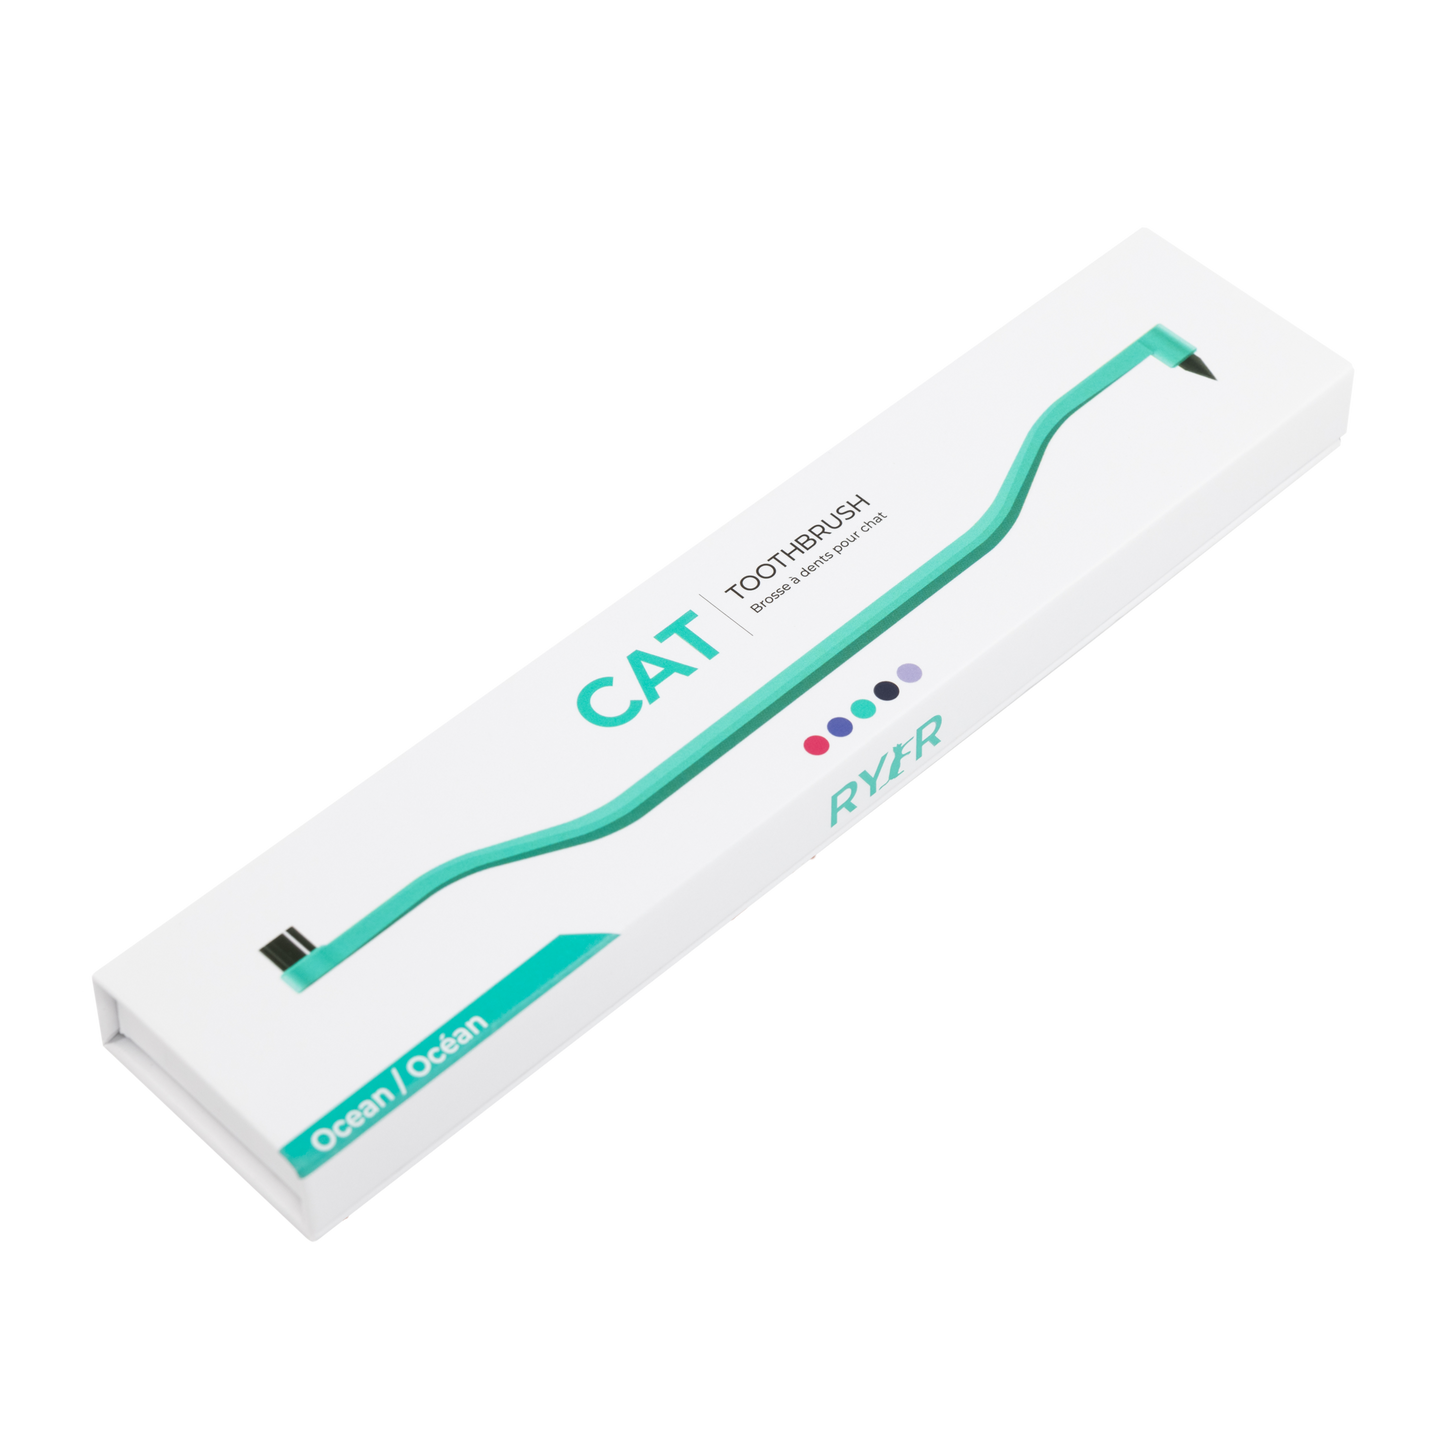 RYERCAT Dual Sided Cat Toothbrush